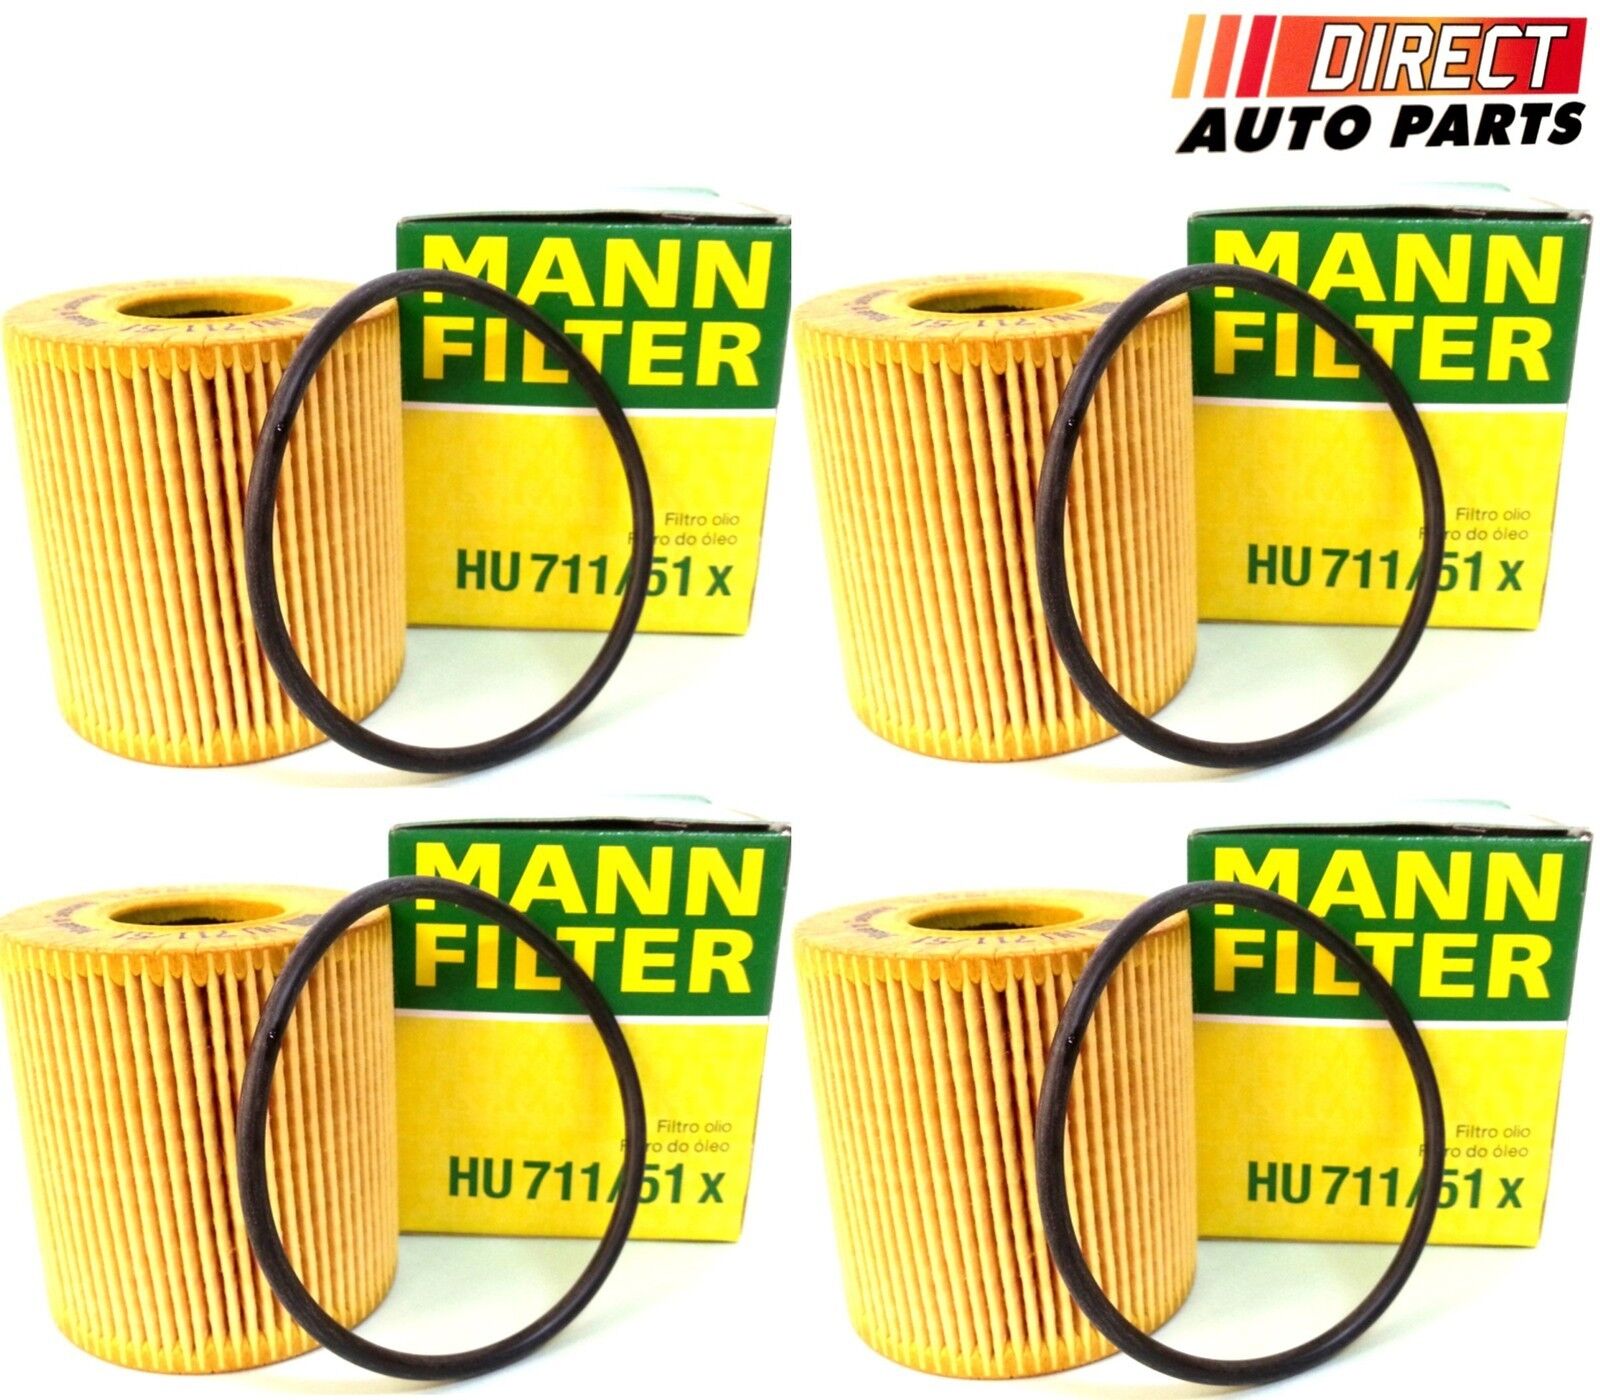 4 - Mini Cooper Oil Filter MANN HU 711/51 X Engine Oil Filter